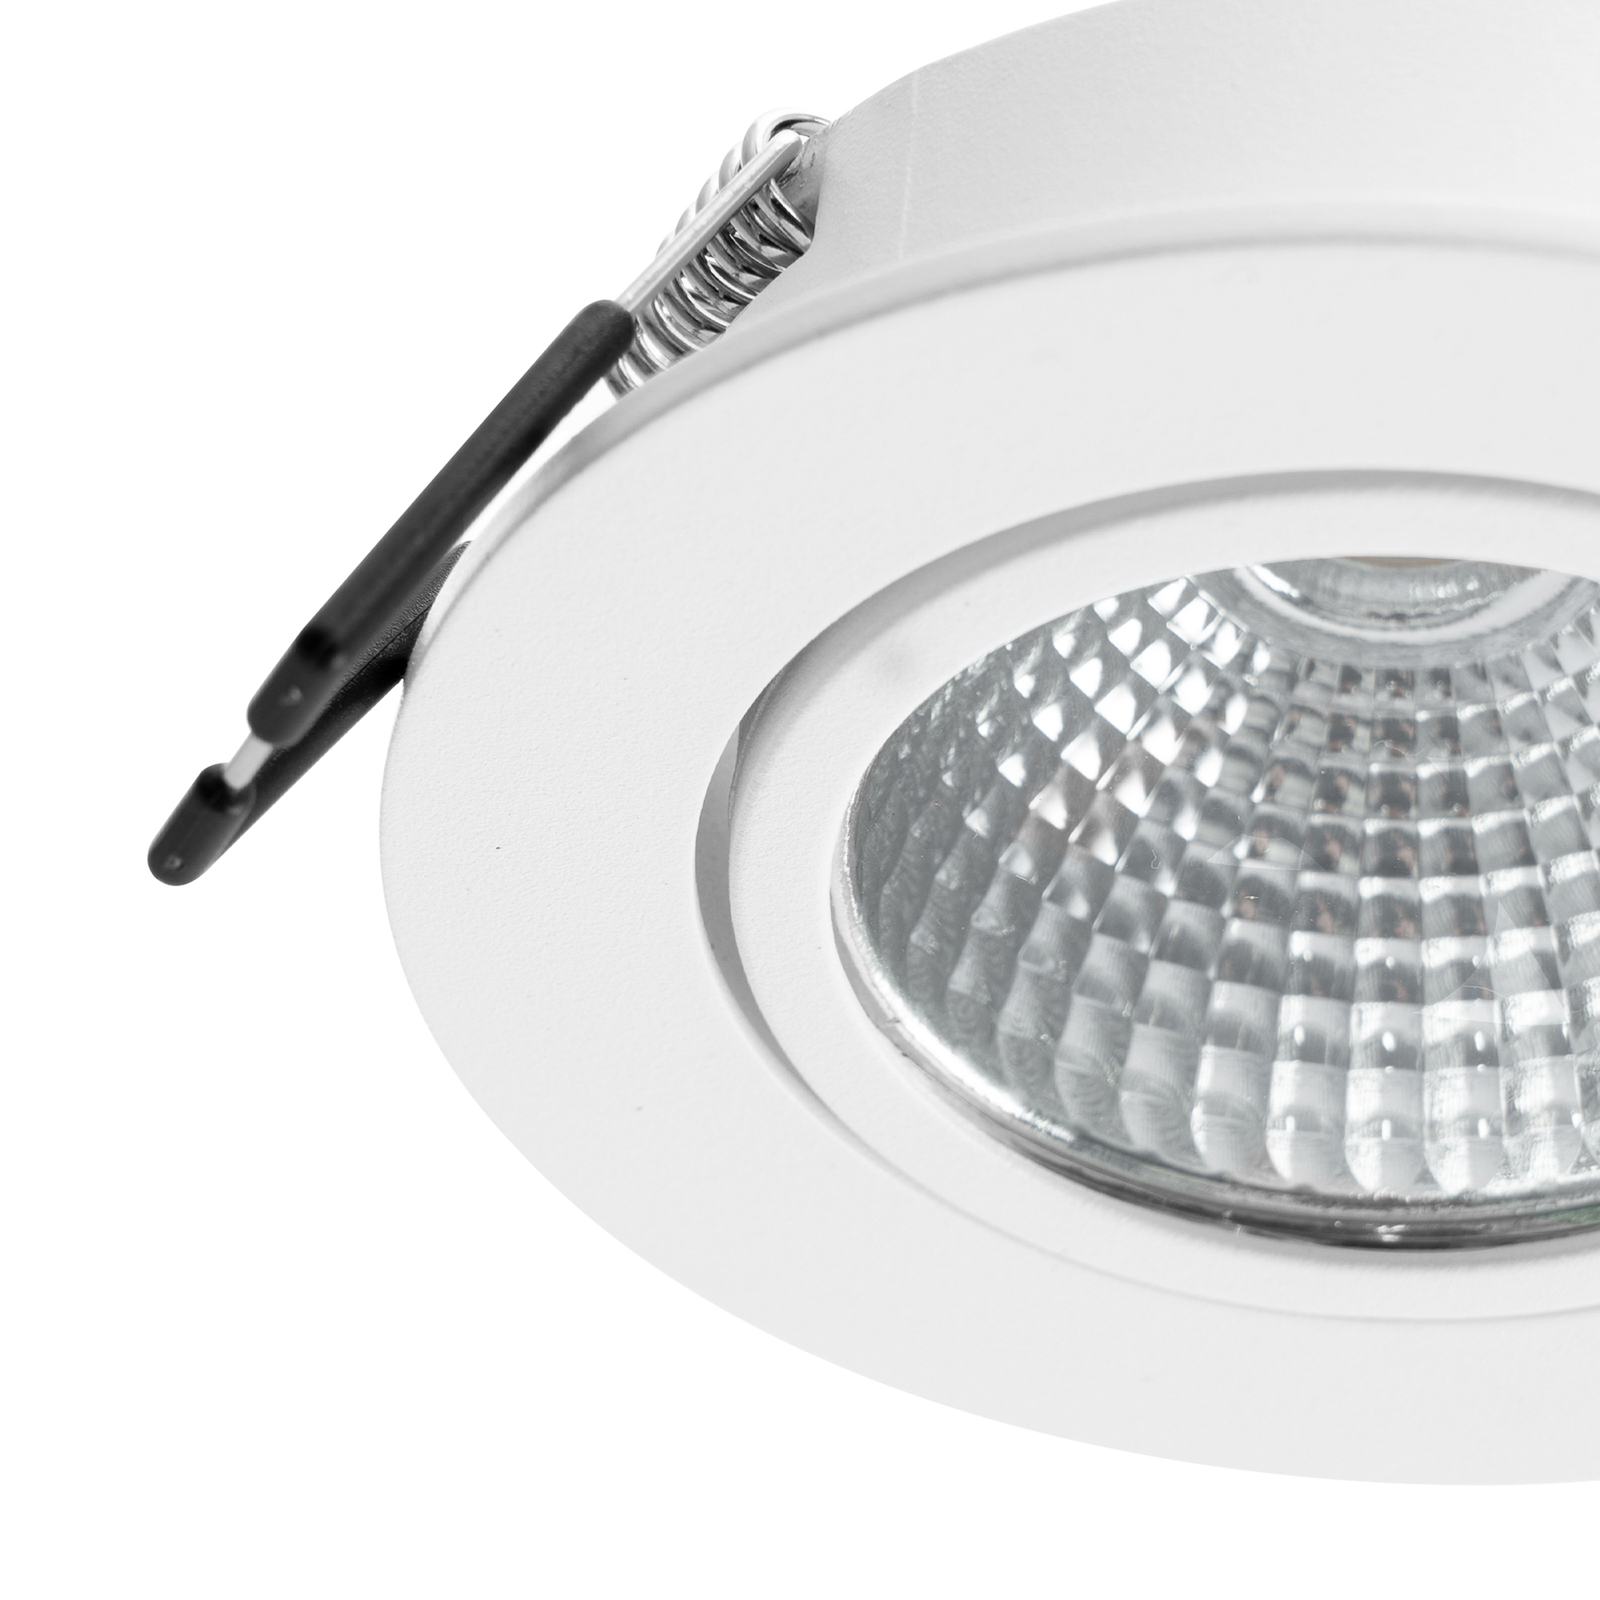 Arcchio LED stropné svietidlo Zarik, biele, 4 000 K